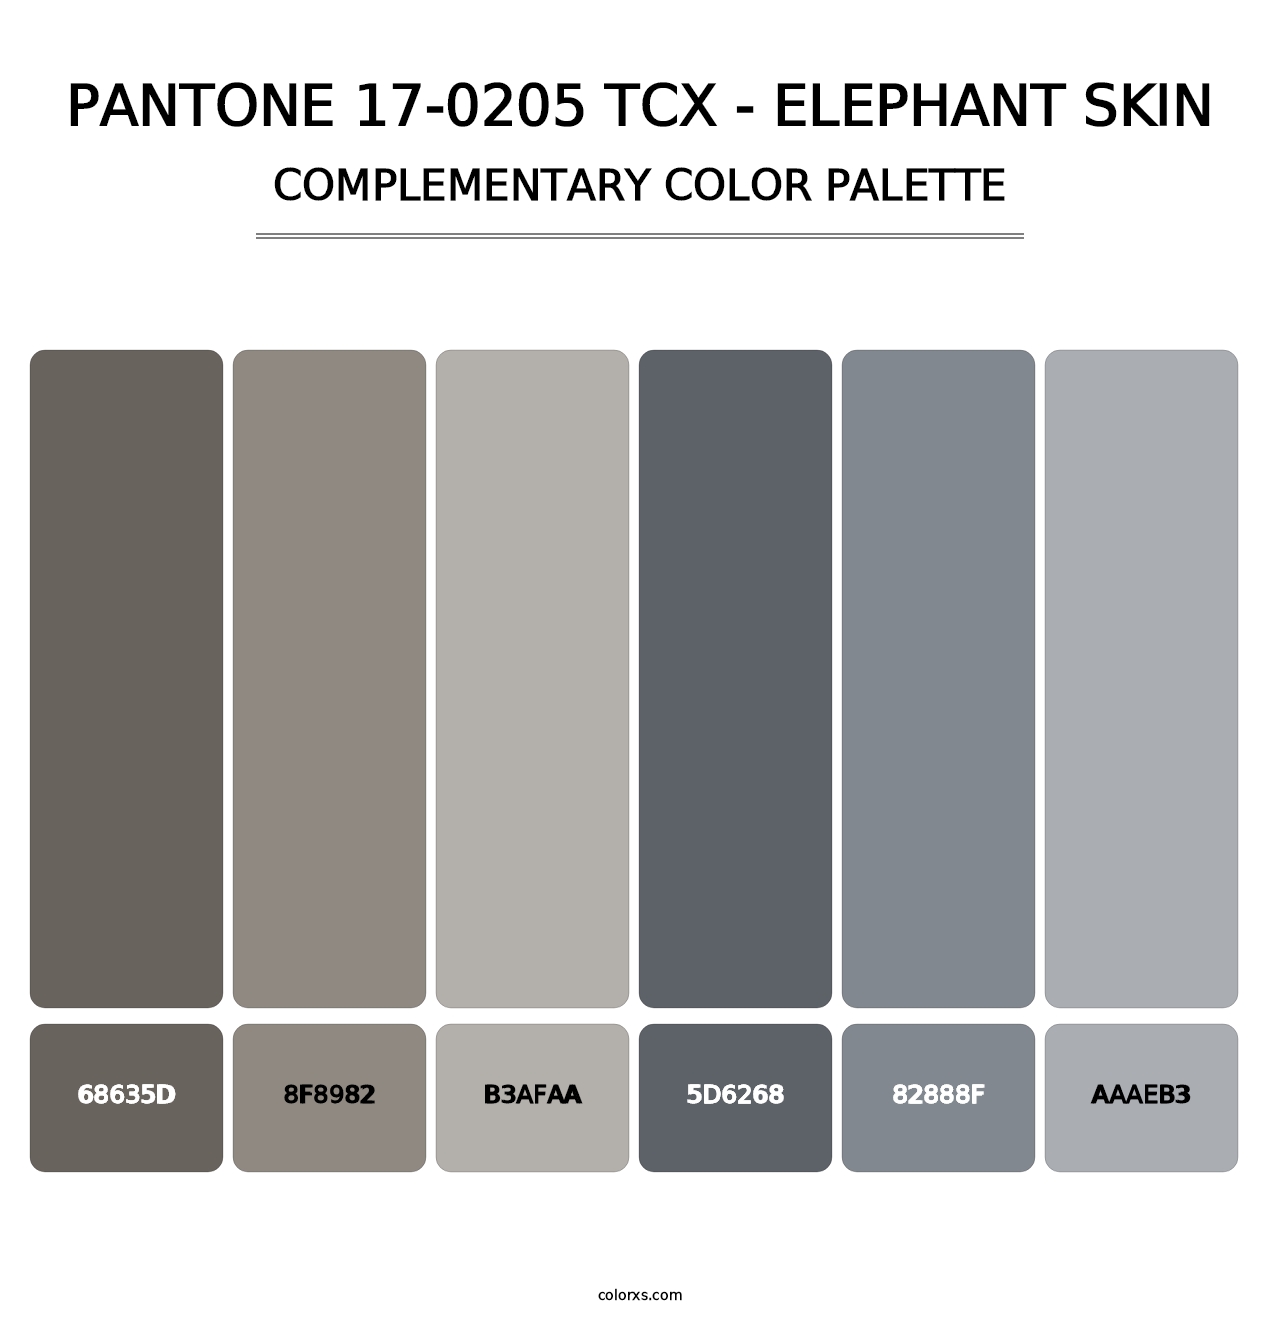 PANTONE 17-0205 TCX - Elephant Skin - Complementary Color Palette